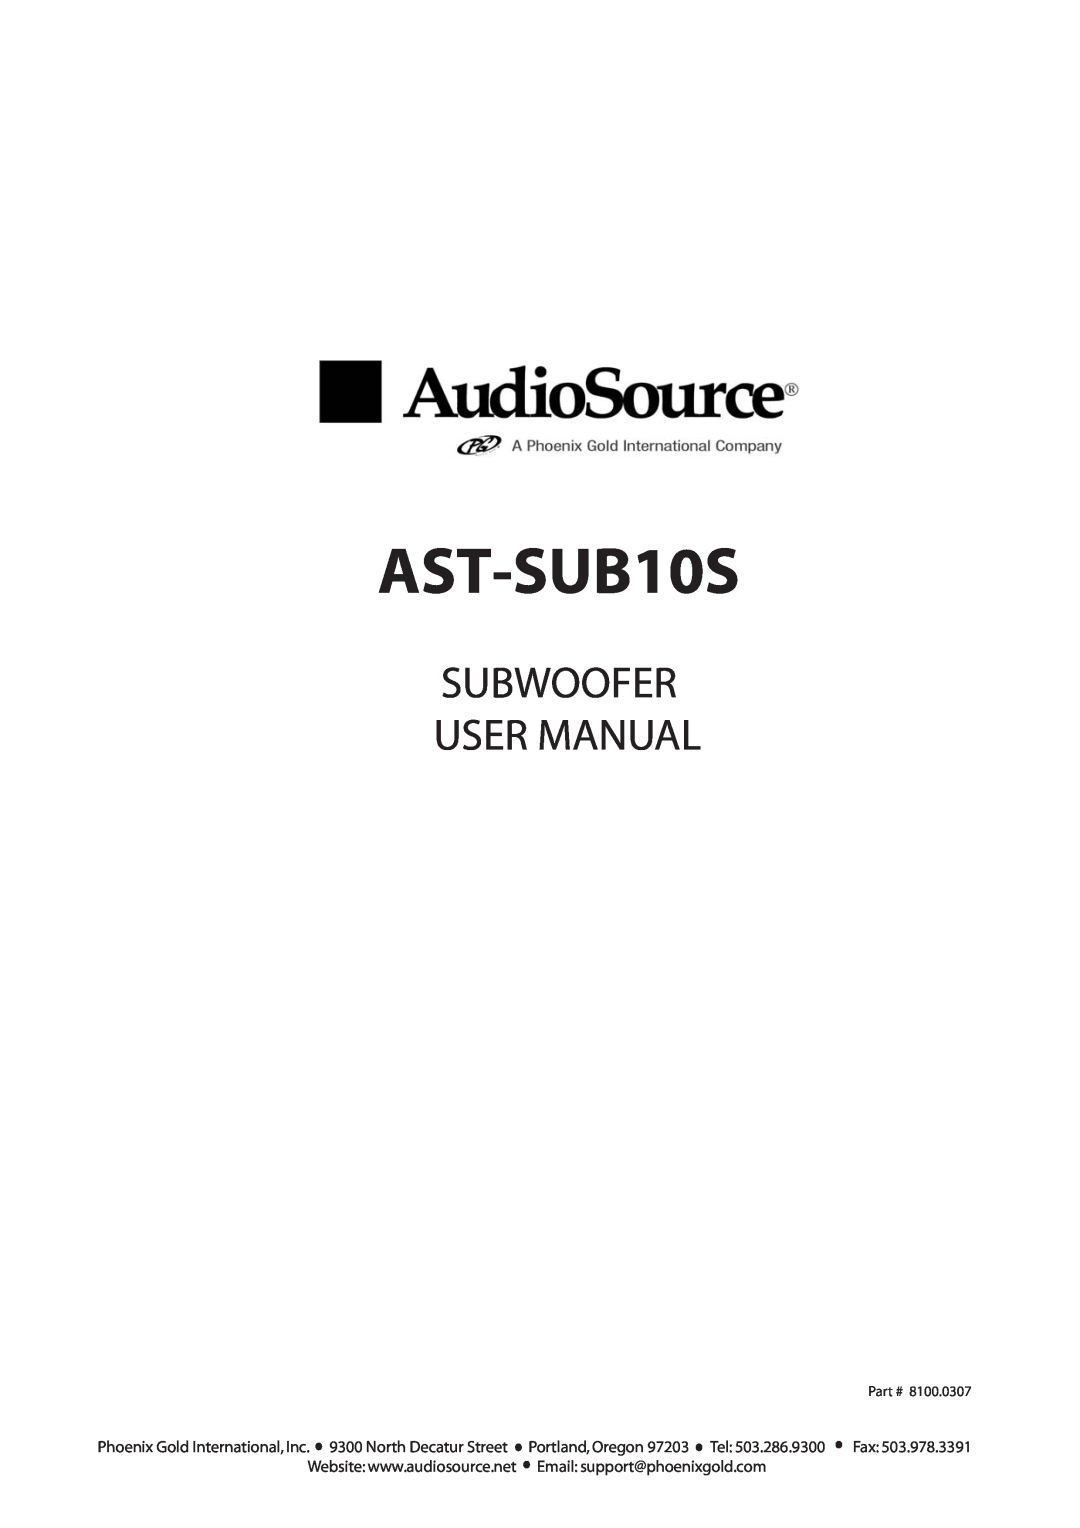 AudioSource AST-SUB10S user manual Portland, Oregon 97203 Tel 